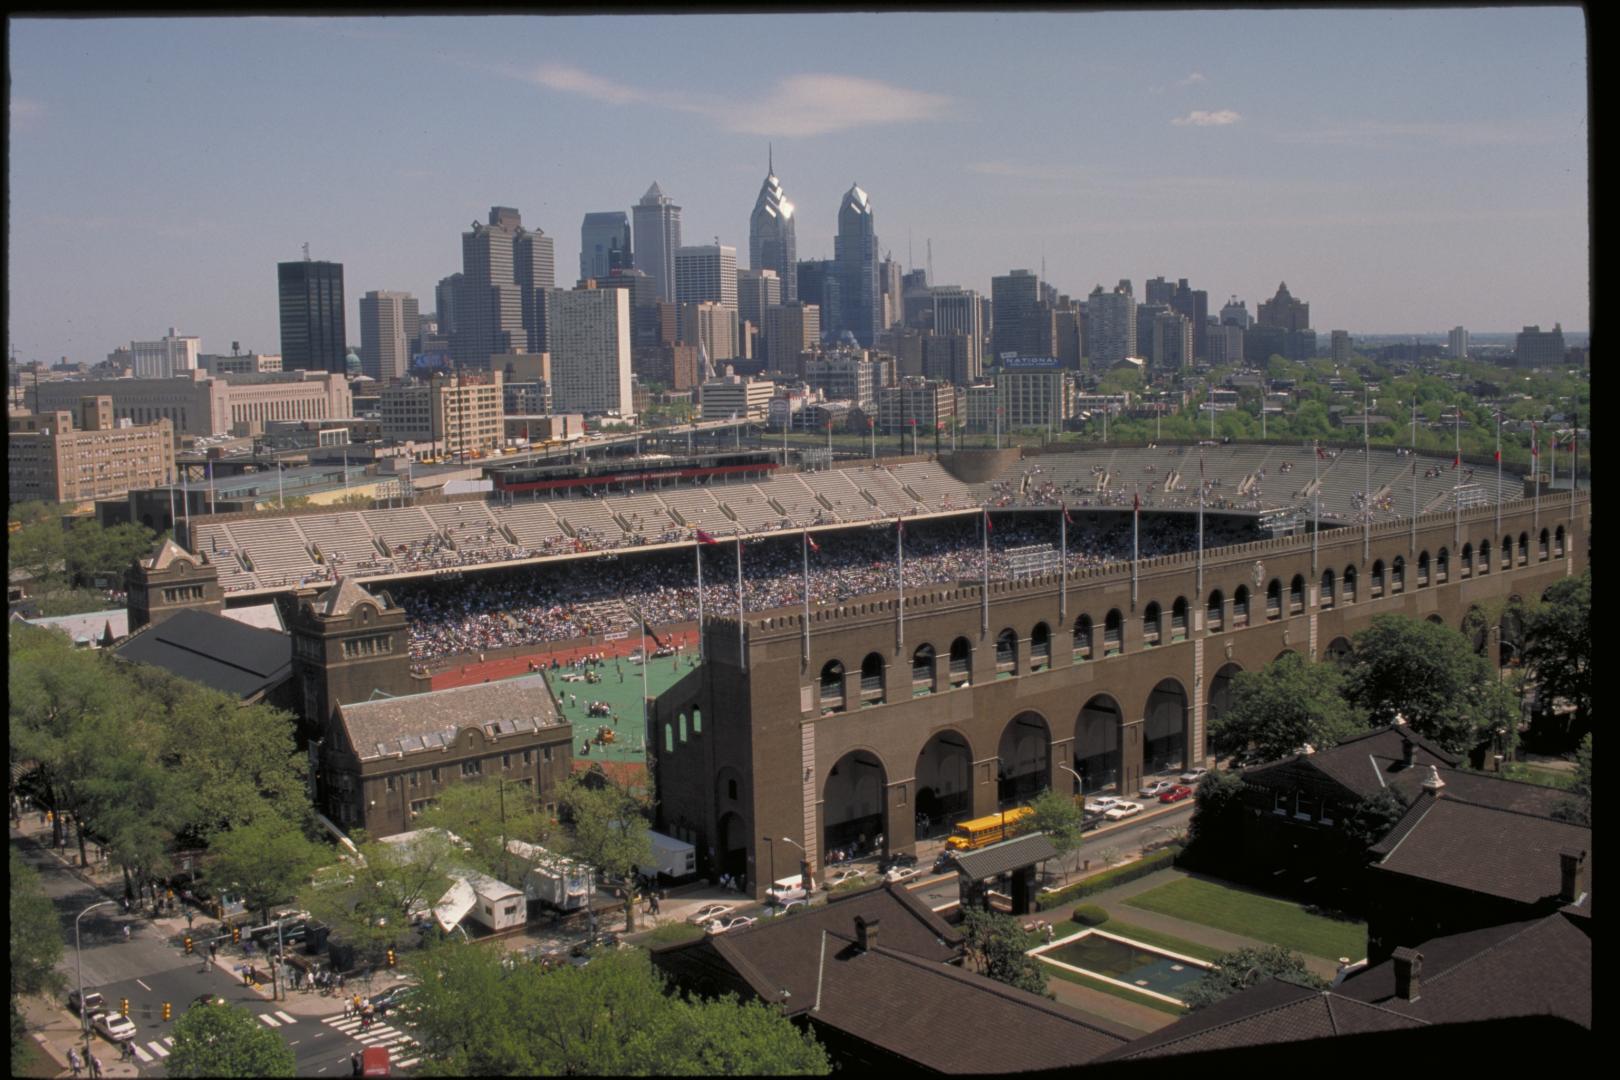 Franklin Field, former home of the Philadelphia Eagles